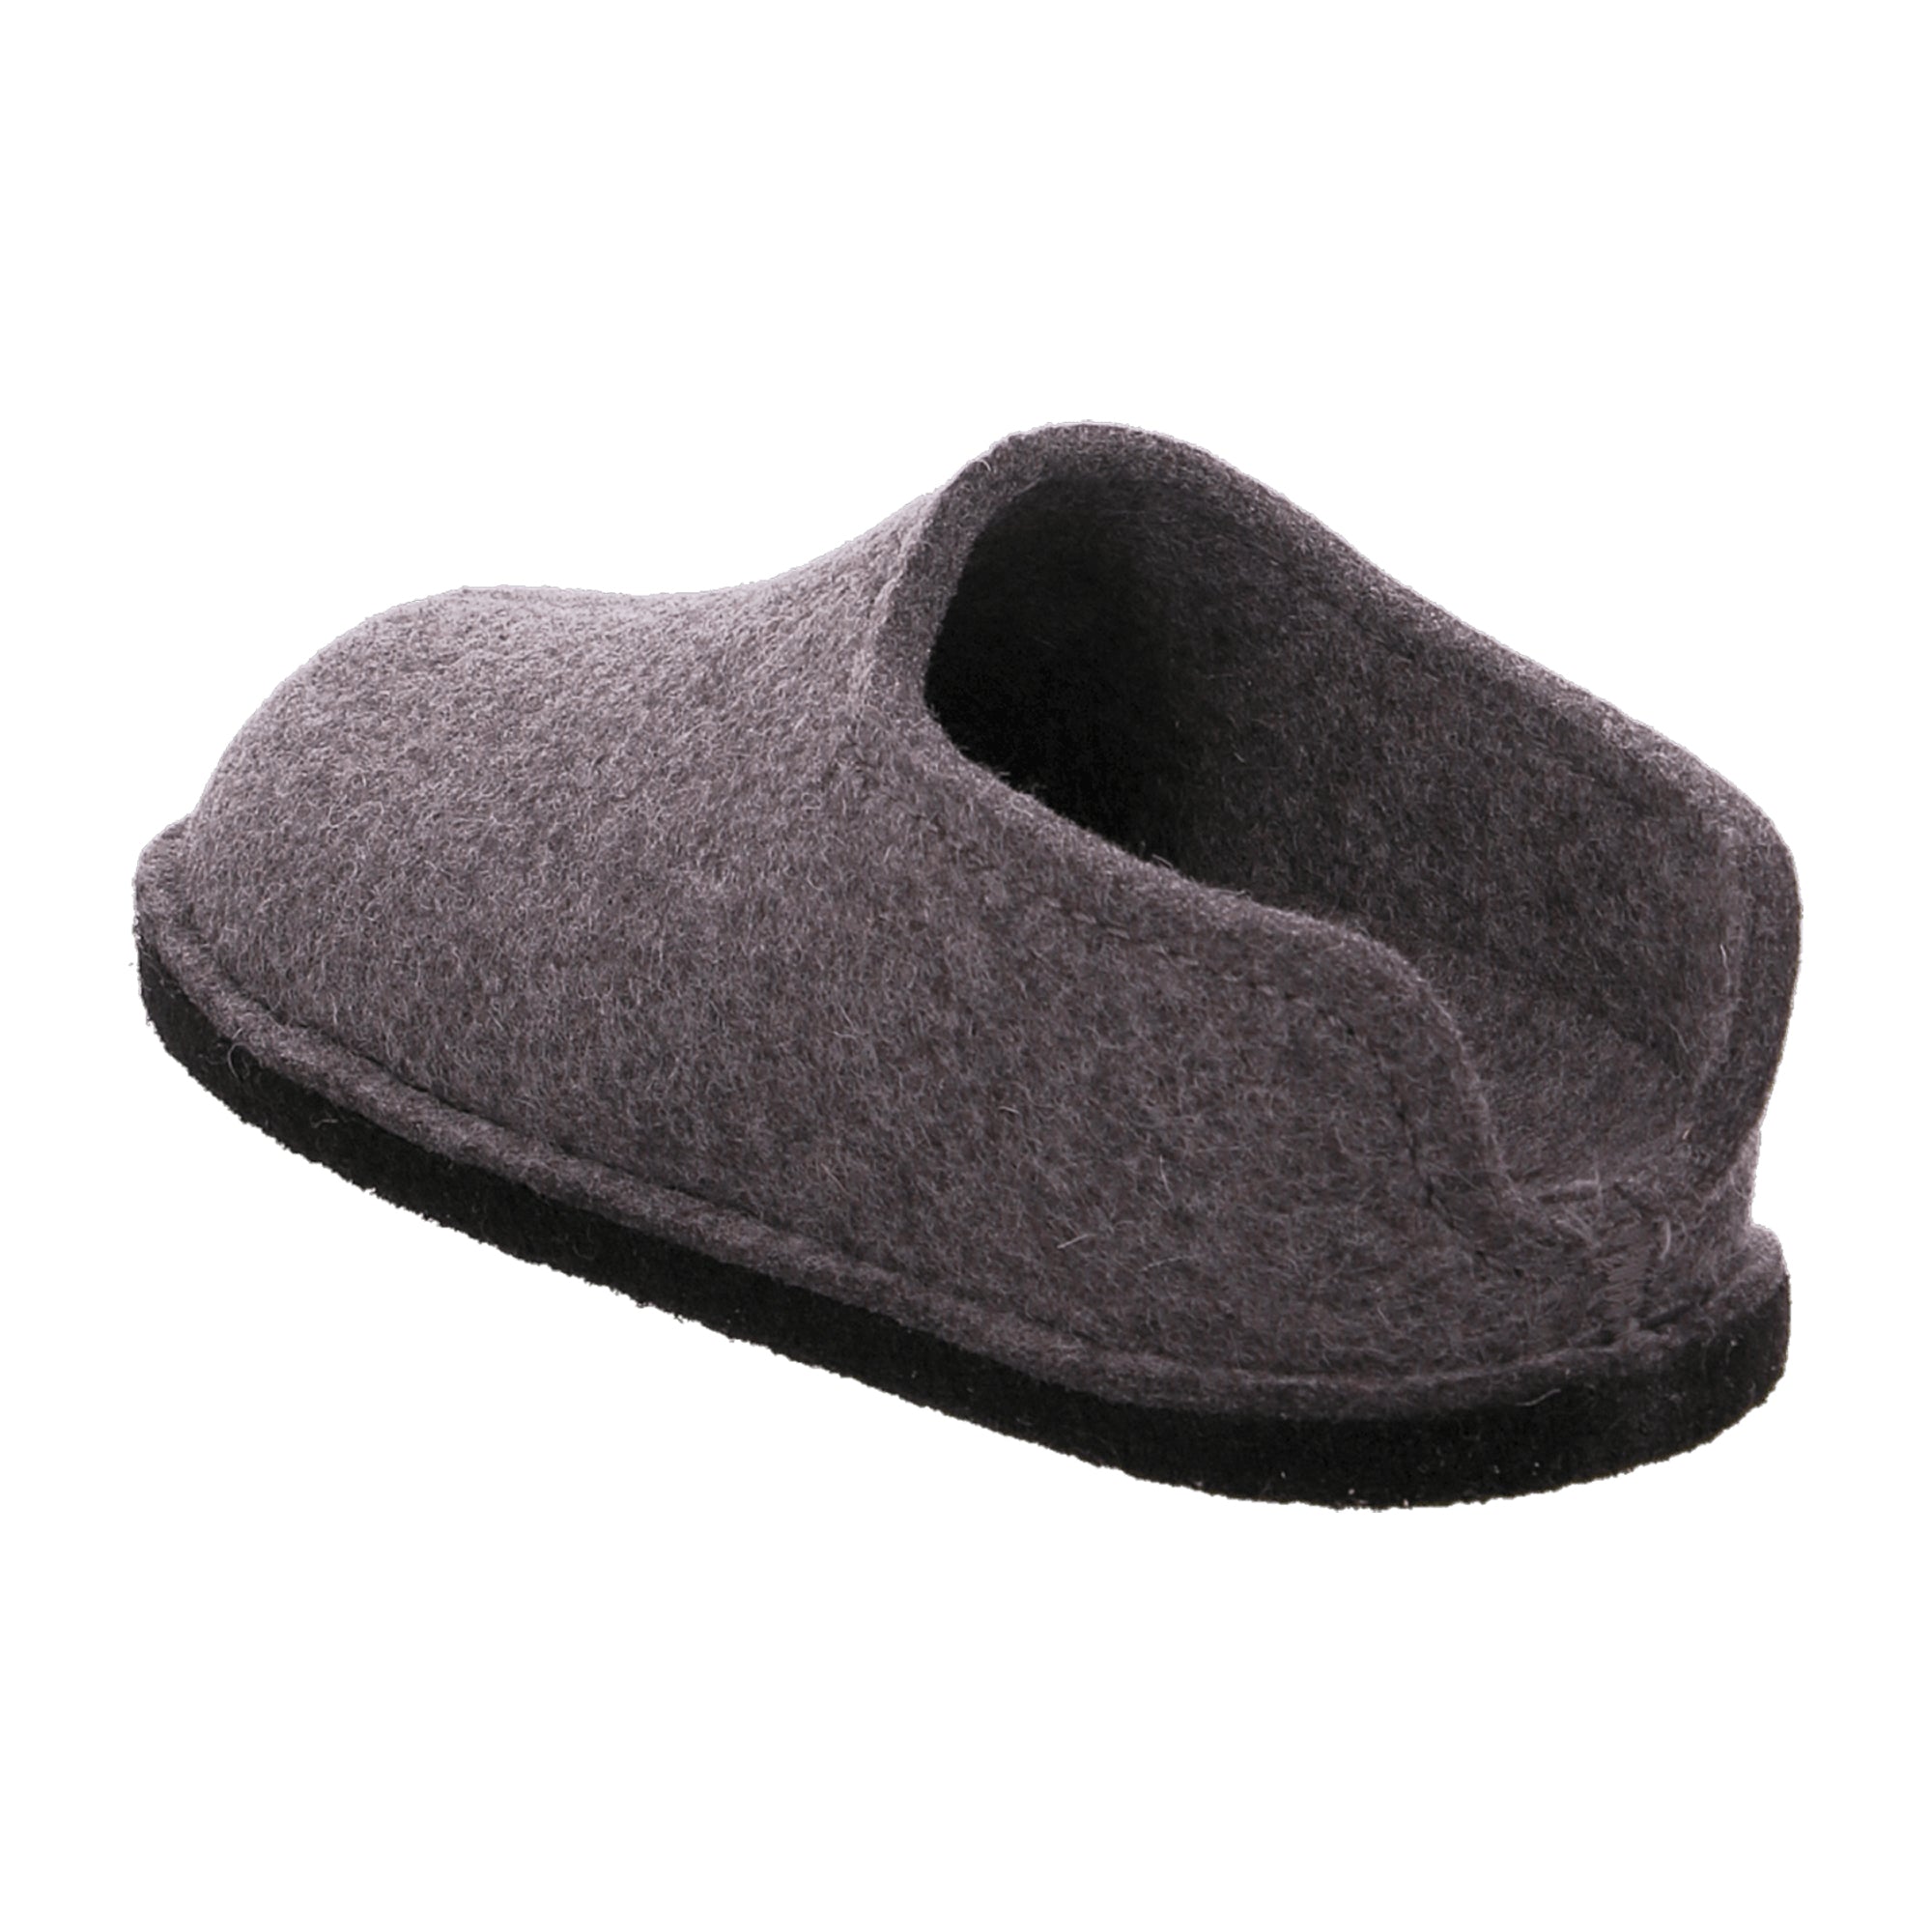 Haflinger Flair Smily Men's Slippers - Stylish Grey Wool Comfort